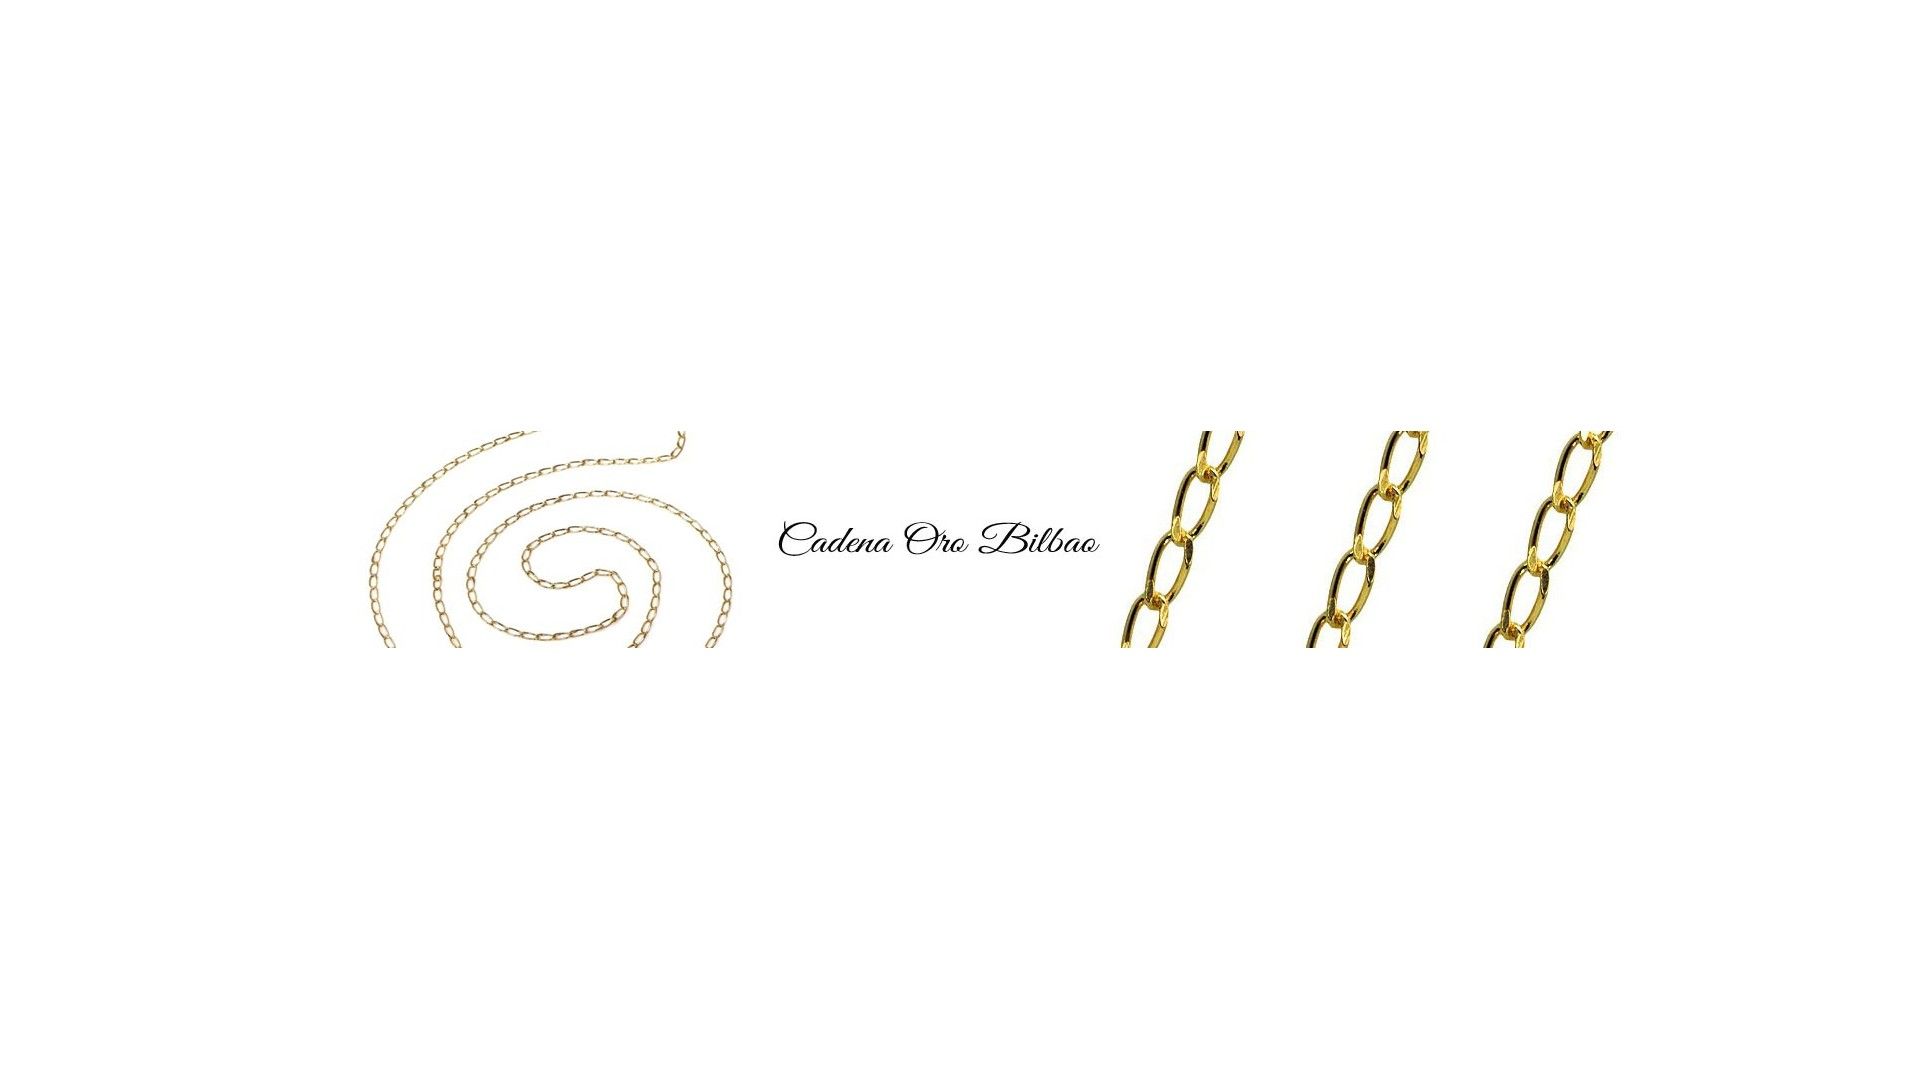 Comprar Cadenas de oro modelo Bilbao online